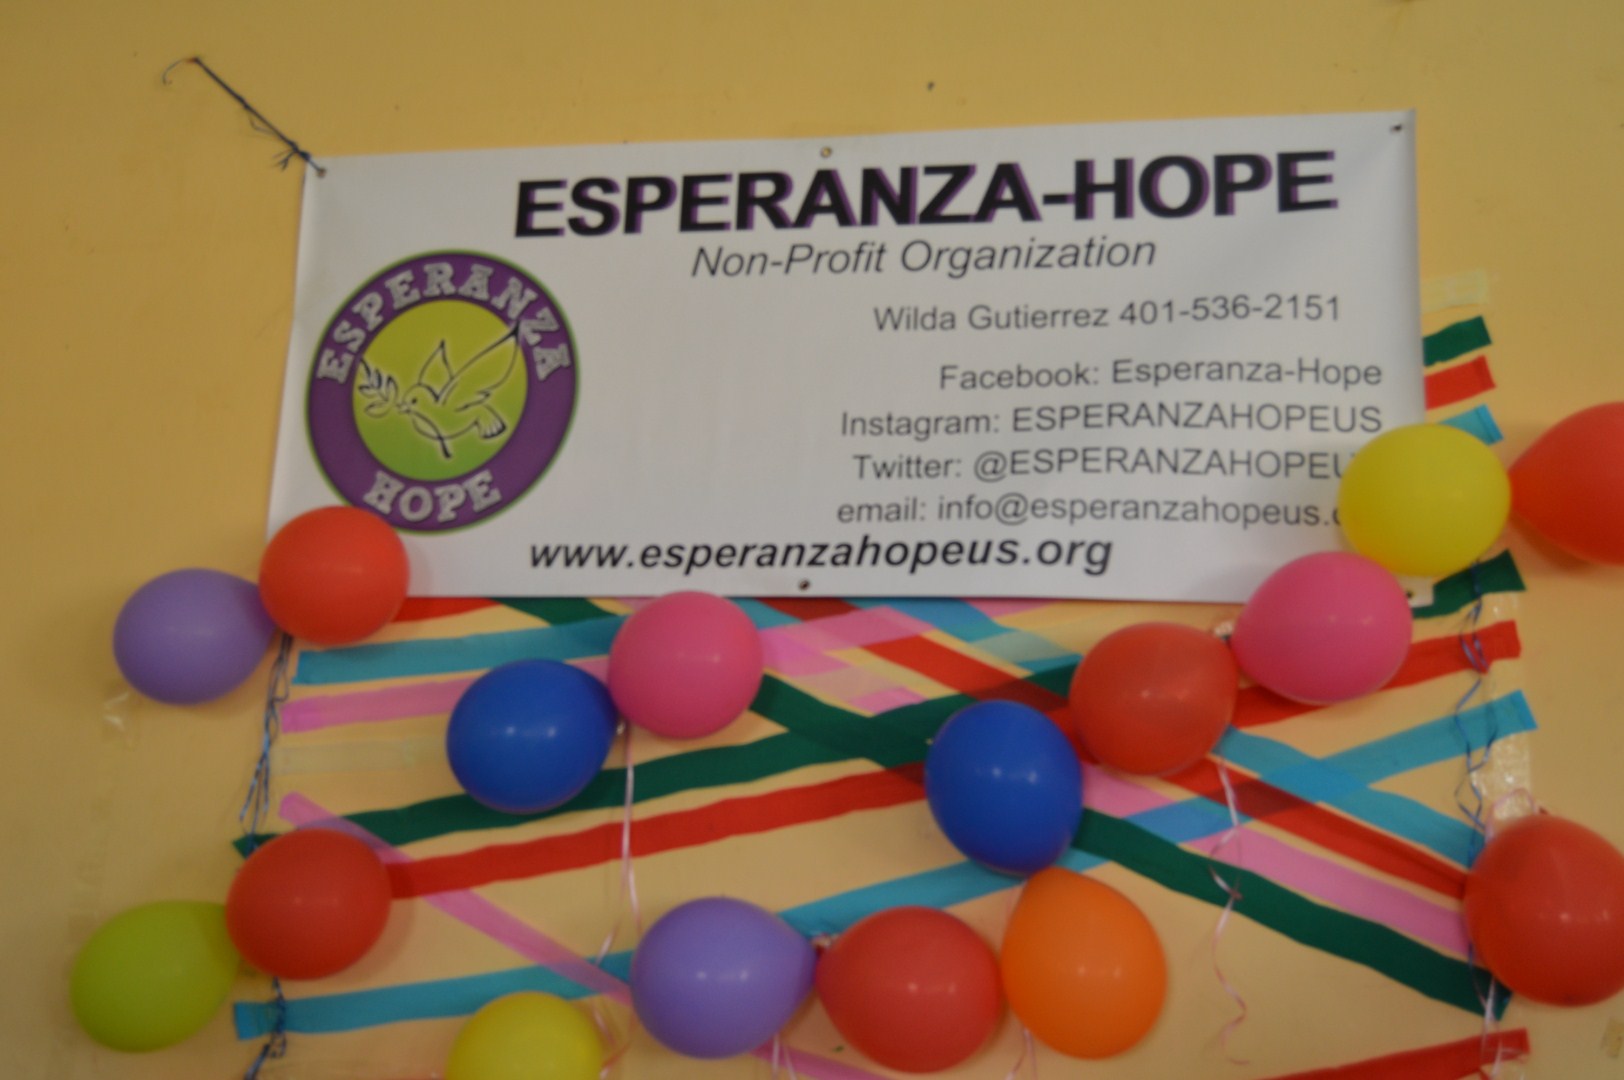 Esperanza-Hope’s tarpaulin and balloons